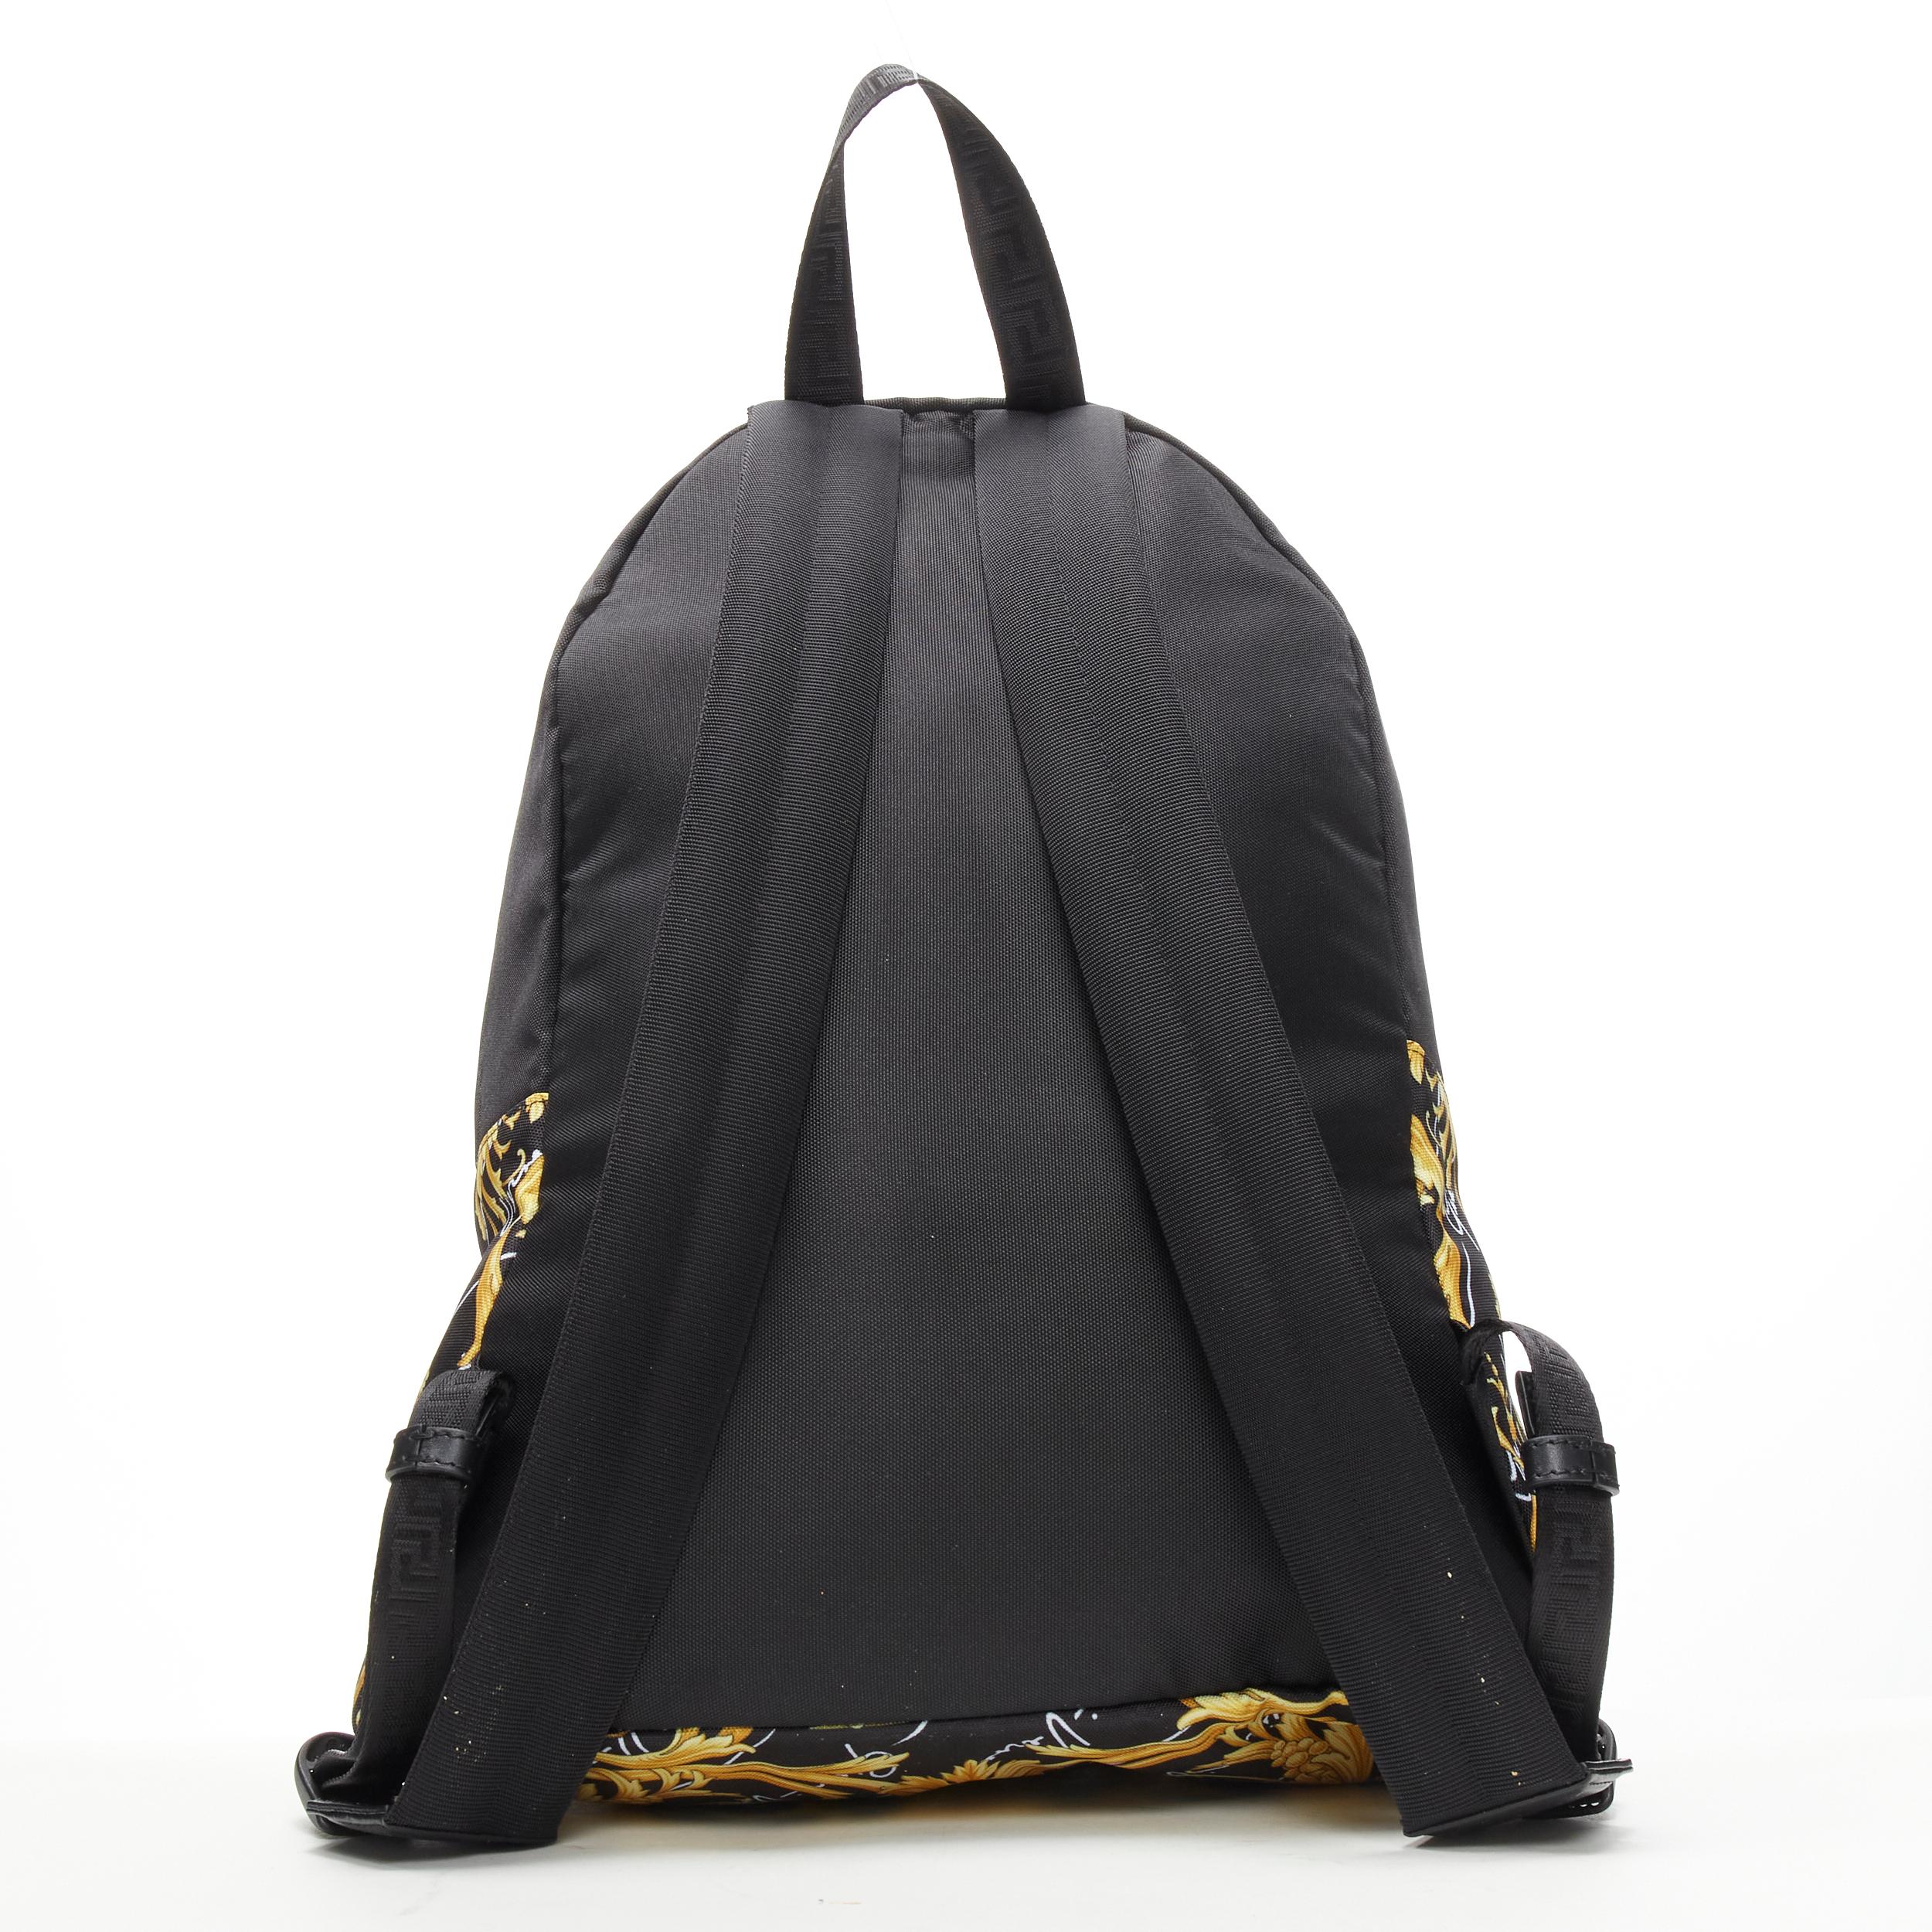 Black new VERSACE Gianni Signature gold Barocco Virtus Medusa print nylon backpack bag